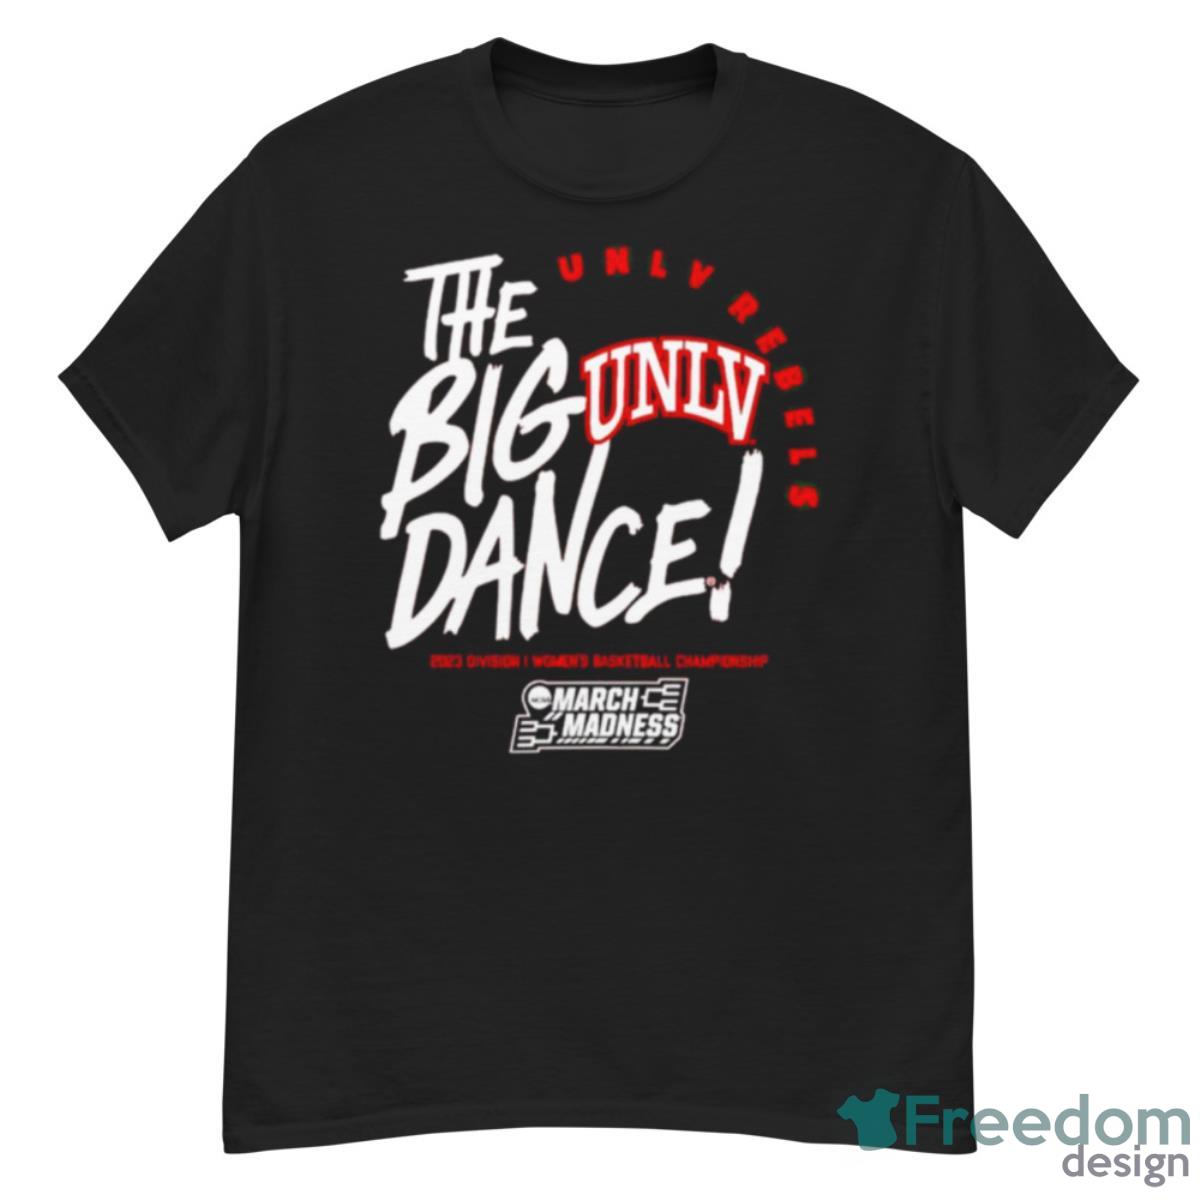 UNLV Rebels the big dance March Madness 2023 Division women’s basketball championship shirt - G500 Men’s Classic T-Shirt